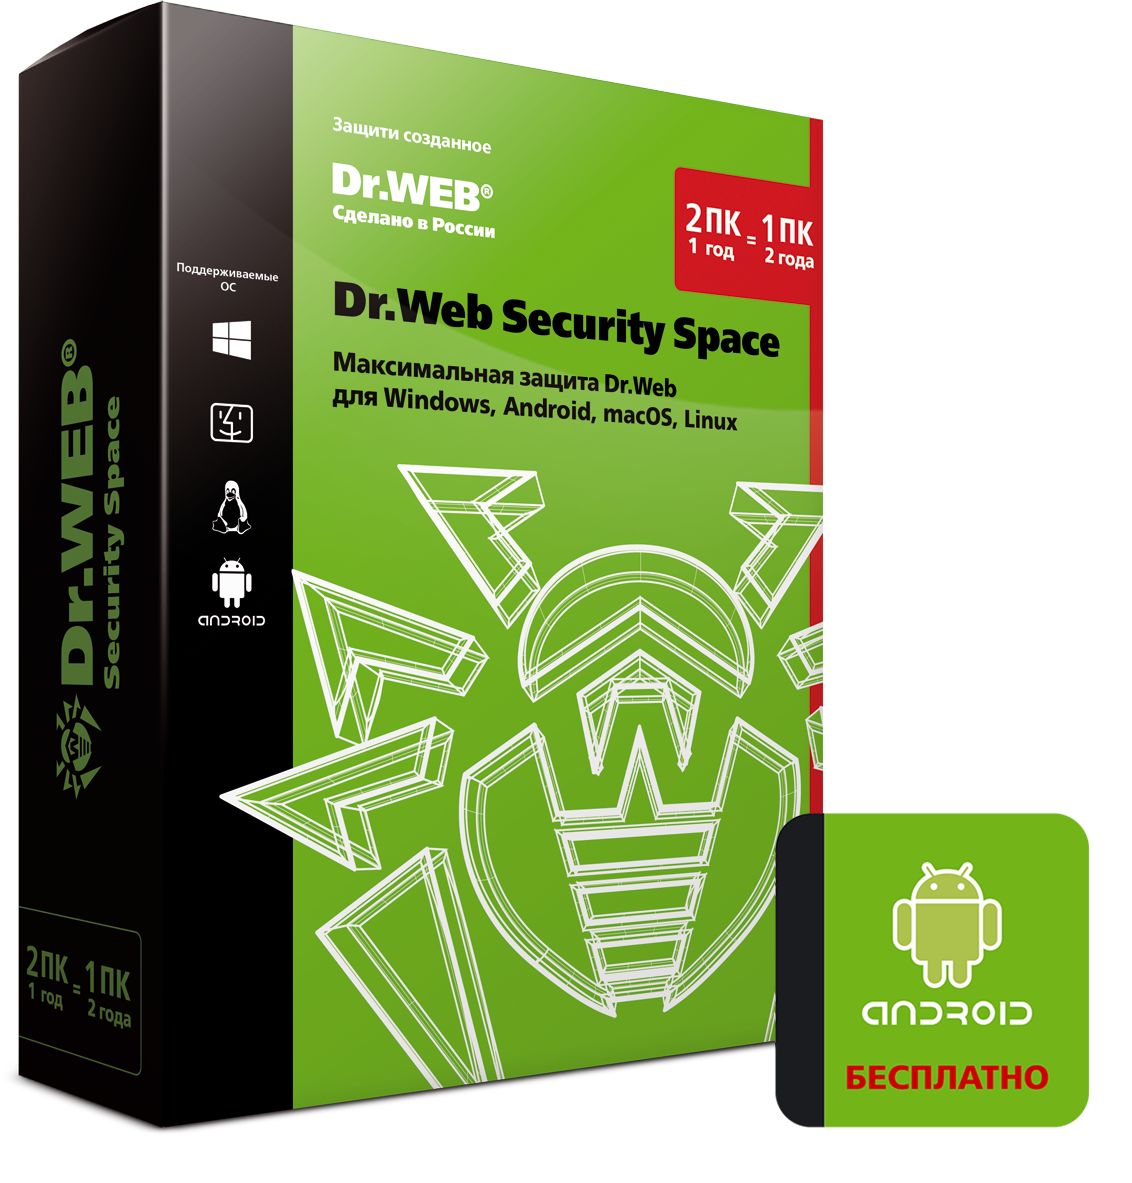 Антивирус Dr.Web Security Space на 1 год на 2 ПК [BHW-B-12M-2-A3] (Box) антивирус drweb security space продление на 1 год на 1 пк [lhw bk 12m 1 b3] электронный ключ